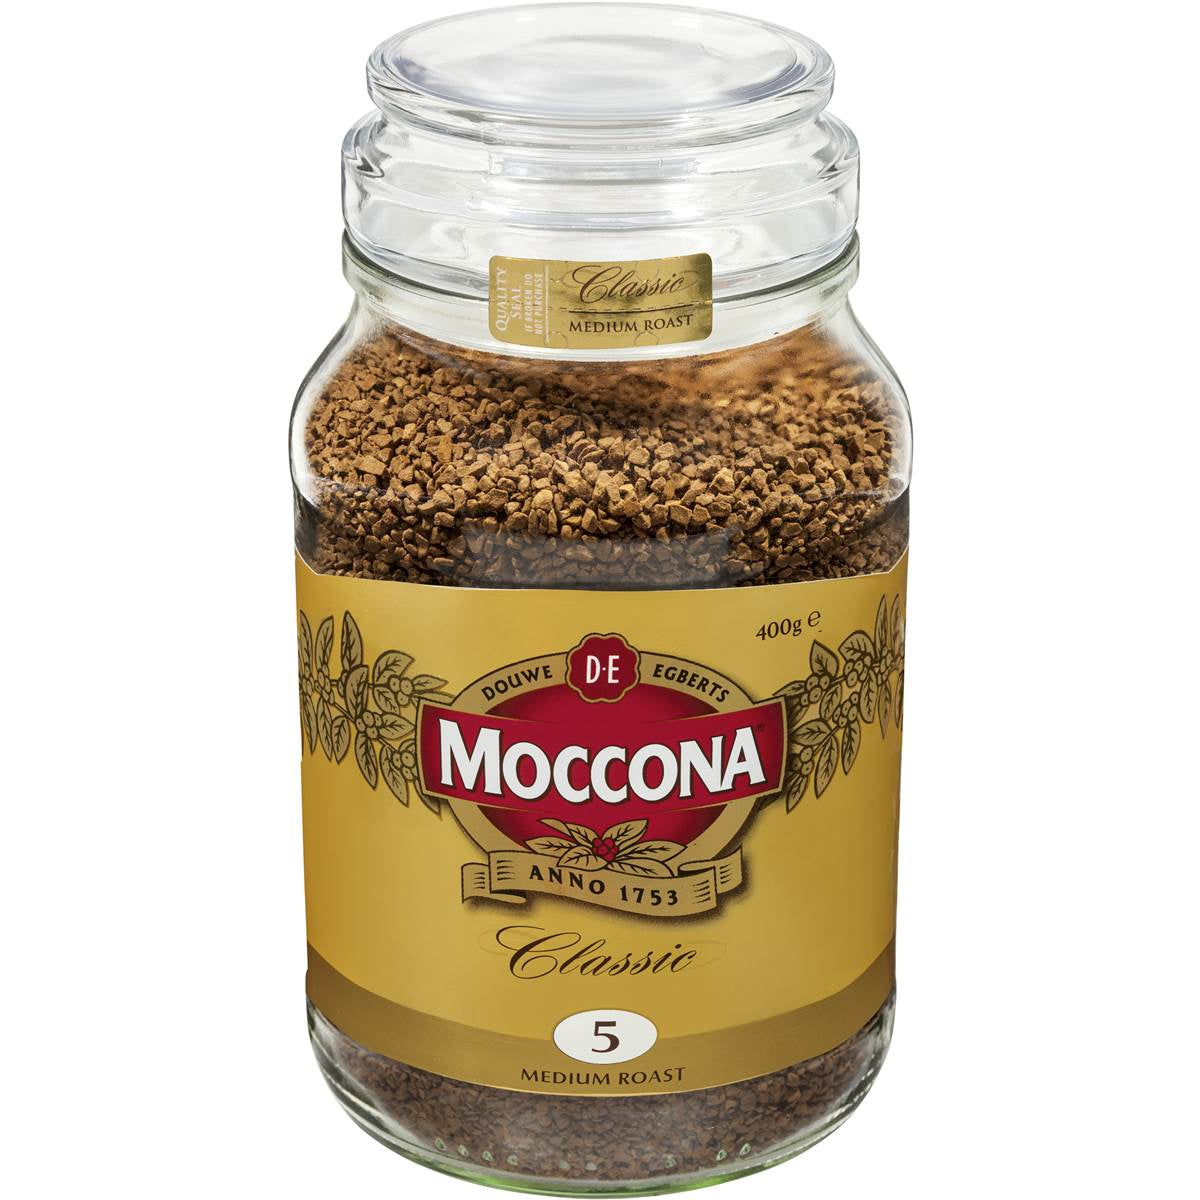 Moccona Coffee Classic Medium Roast 400g